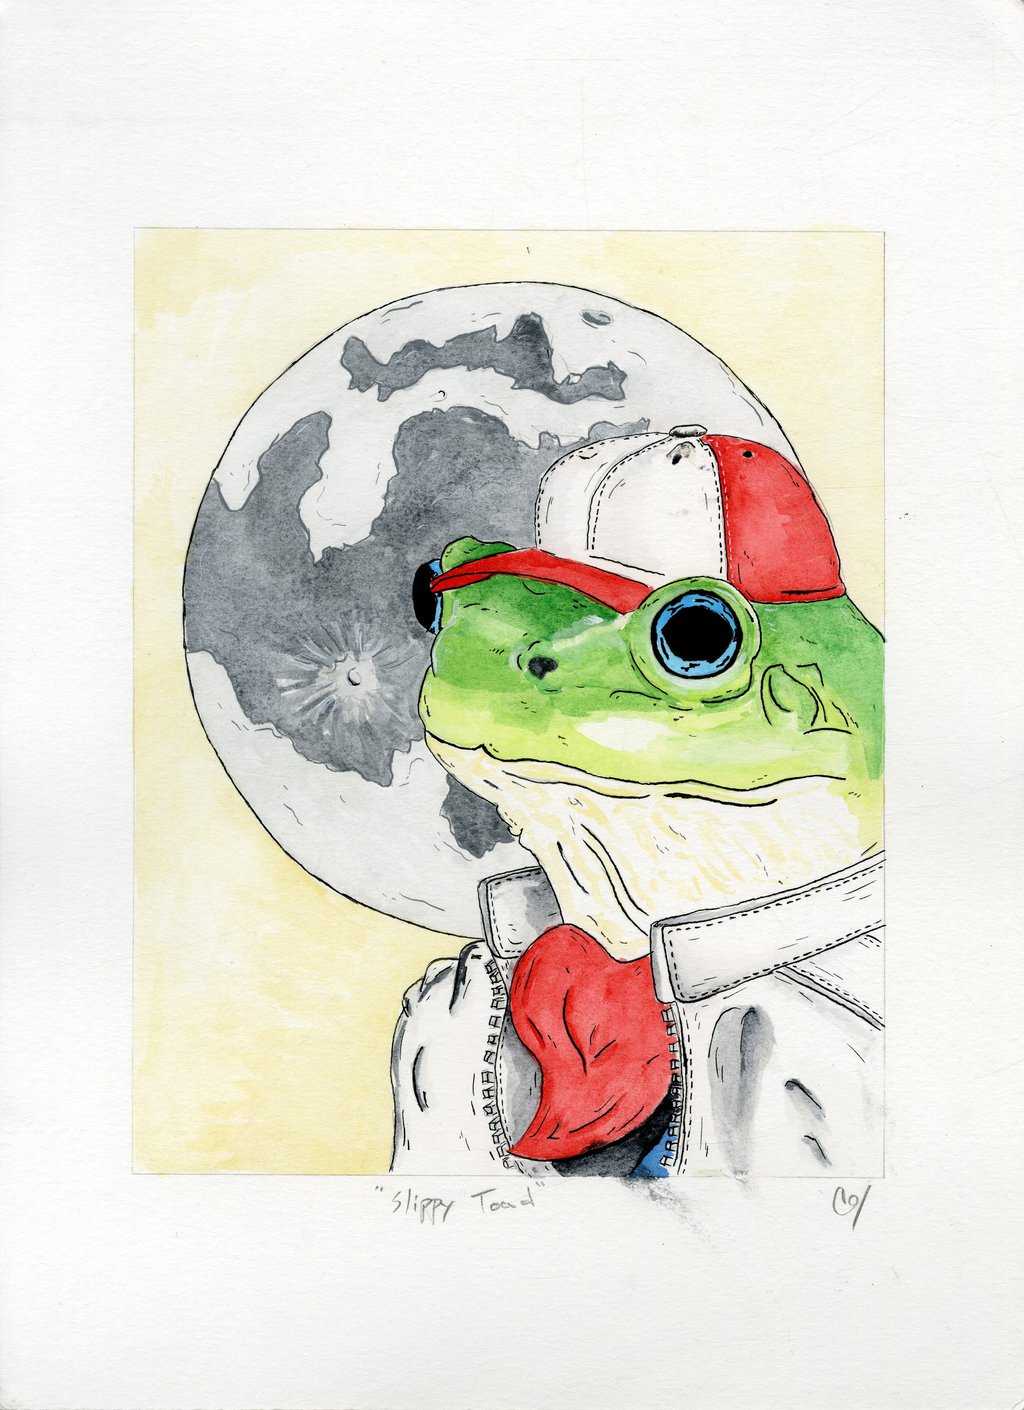 Slippy Toad By Thebeardedgoldfish